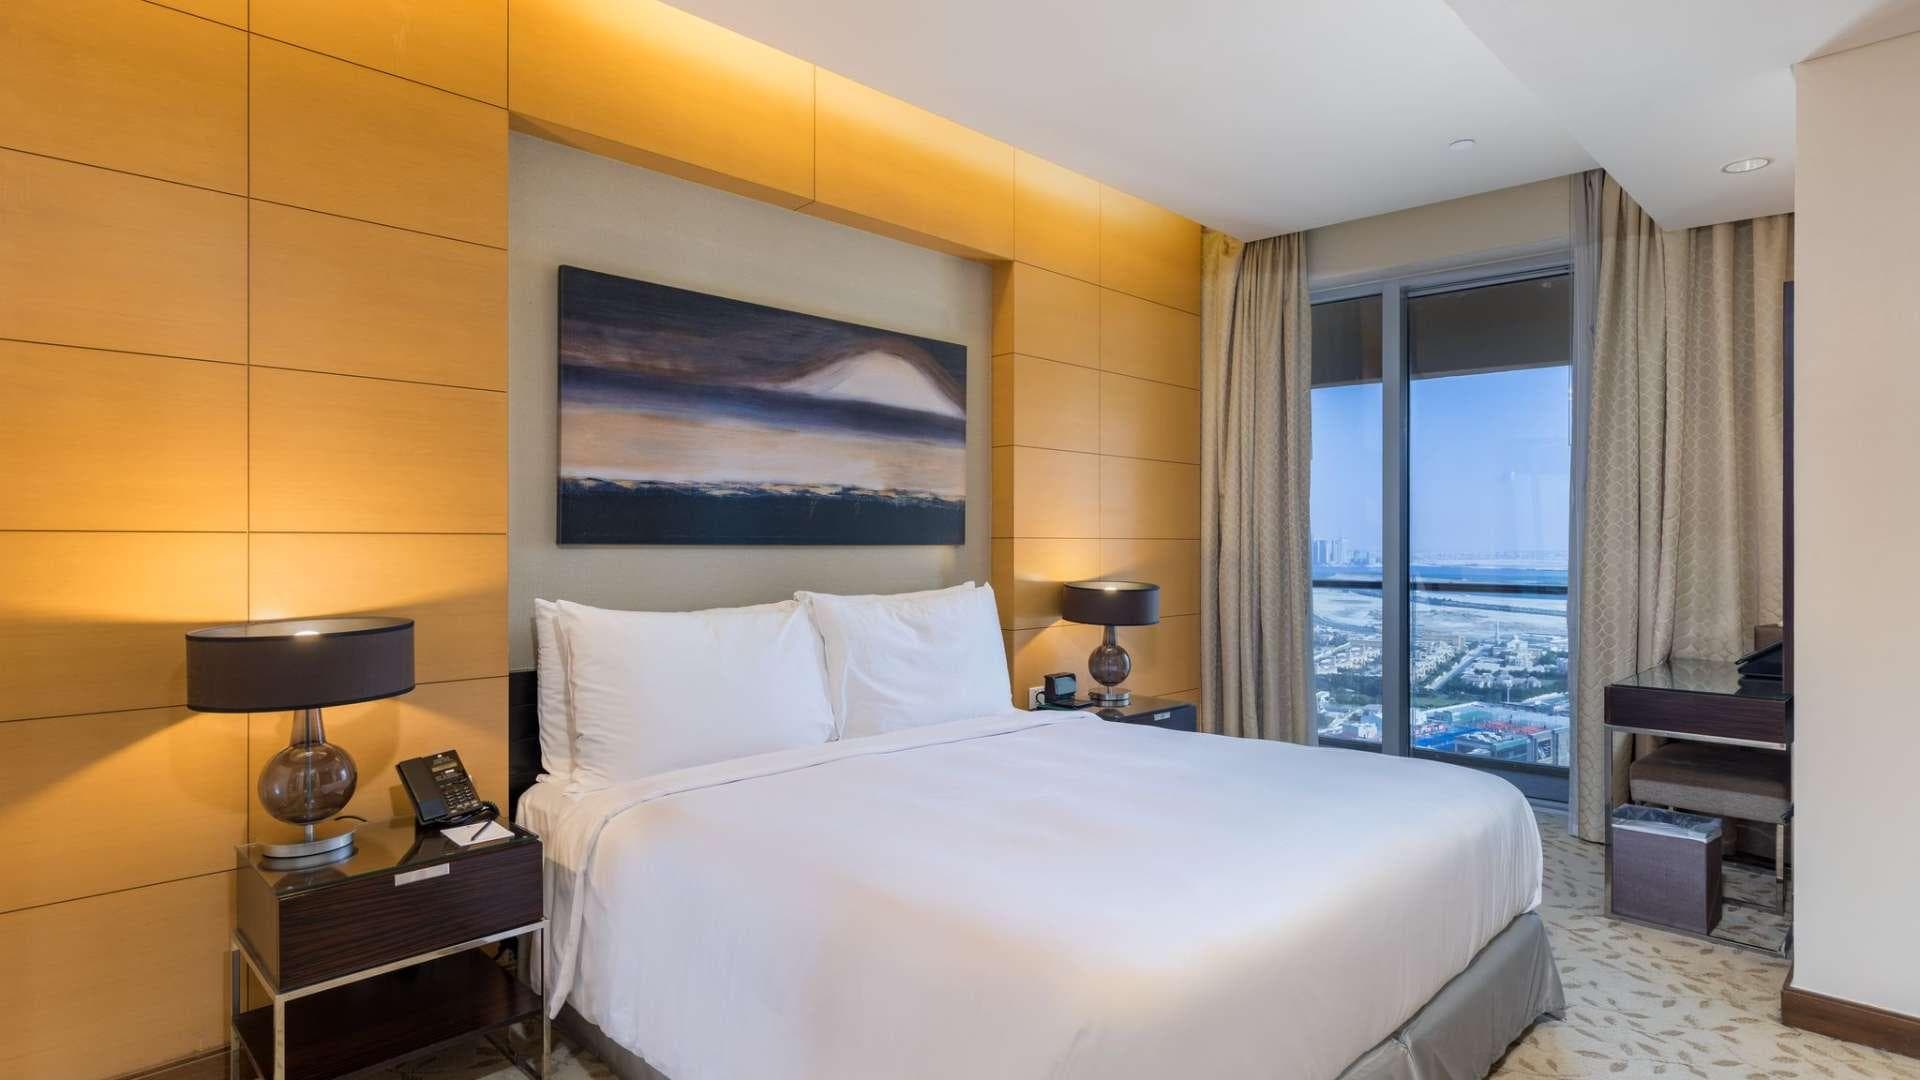 1 Bedroom Apartment For Rent The Address Dubai Mall Lp12545 1cd606b545c09c00.jpg